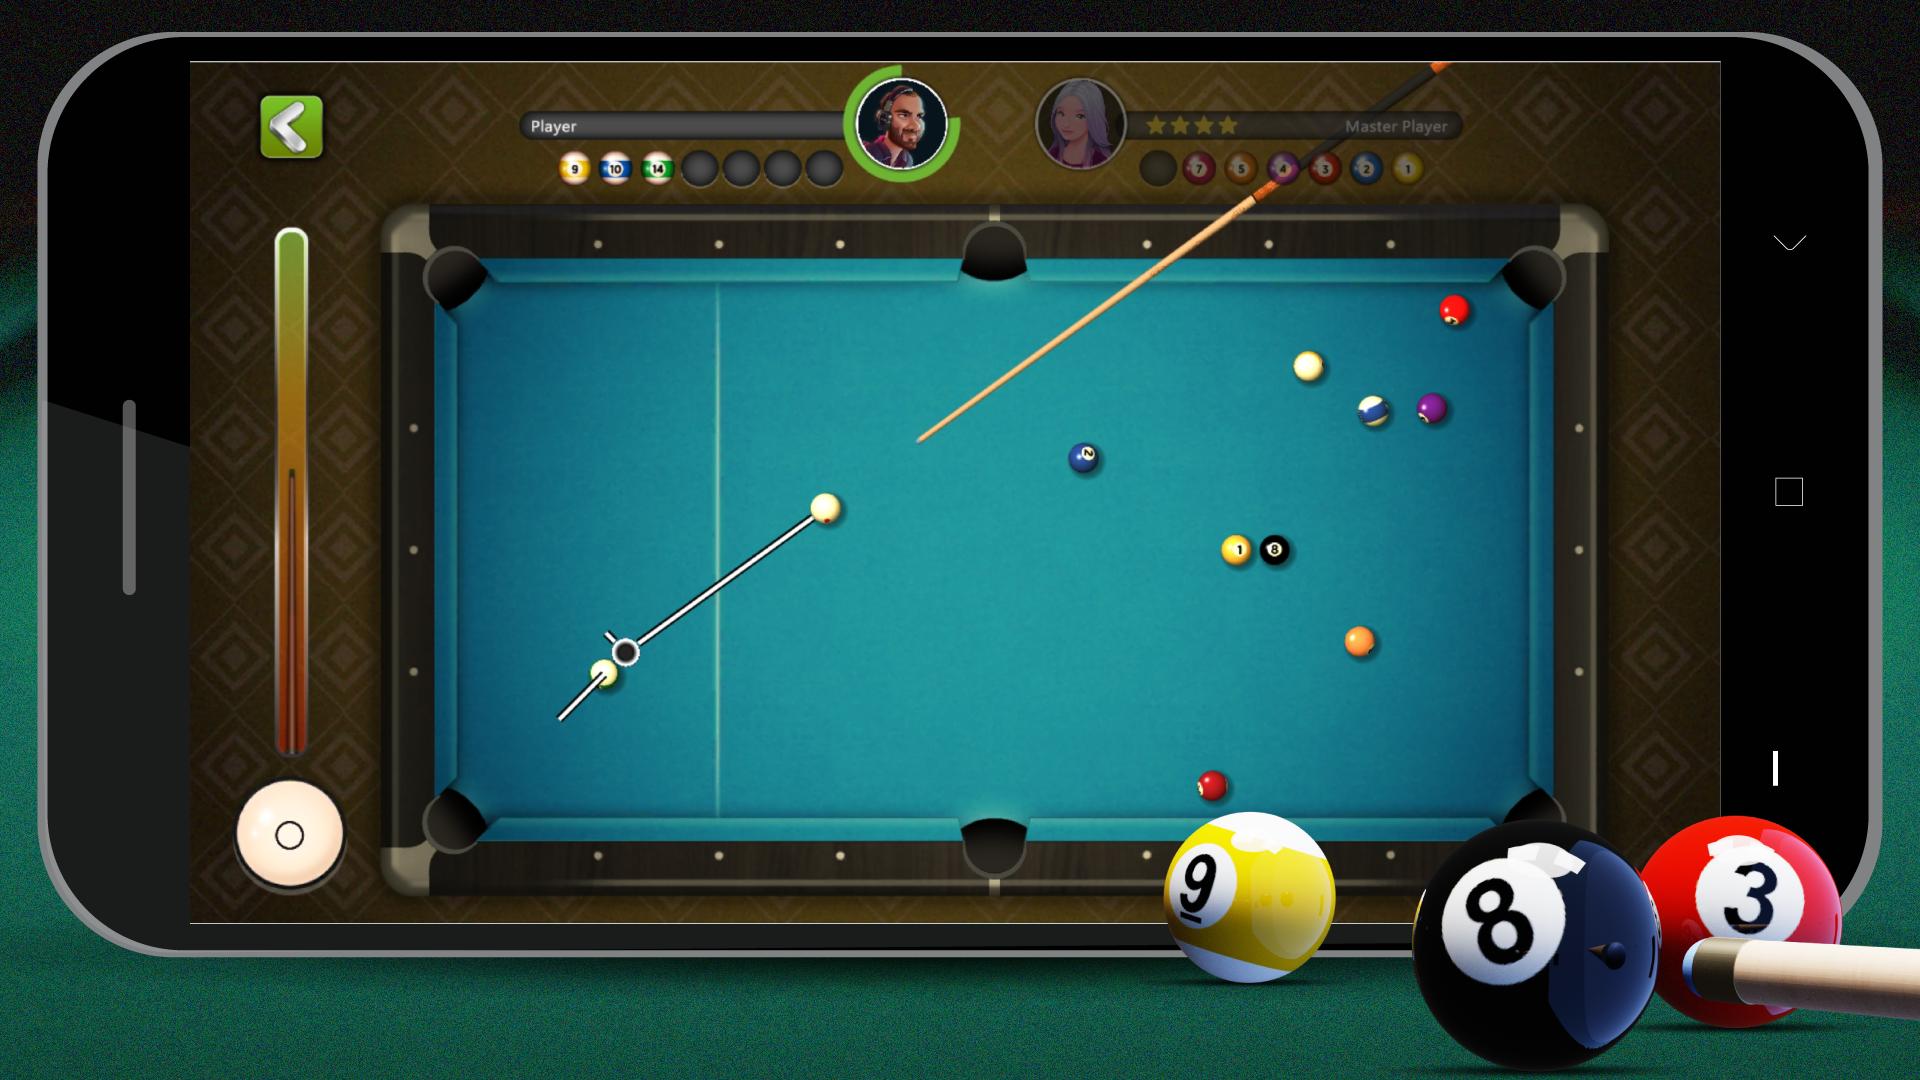 8 Ball Billiards- Offline Free Pool Game 1.51 Screenshot 6